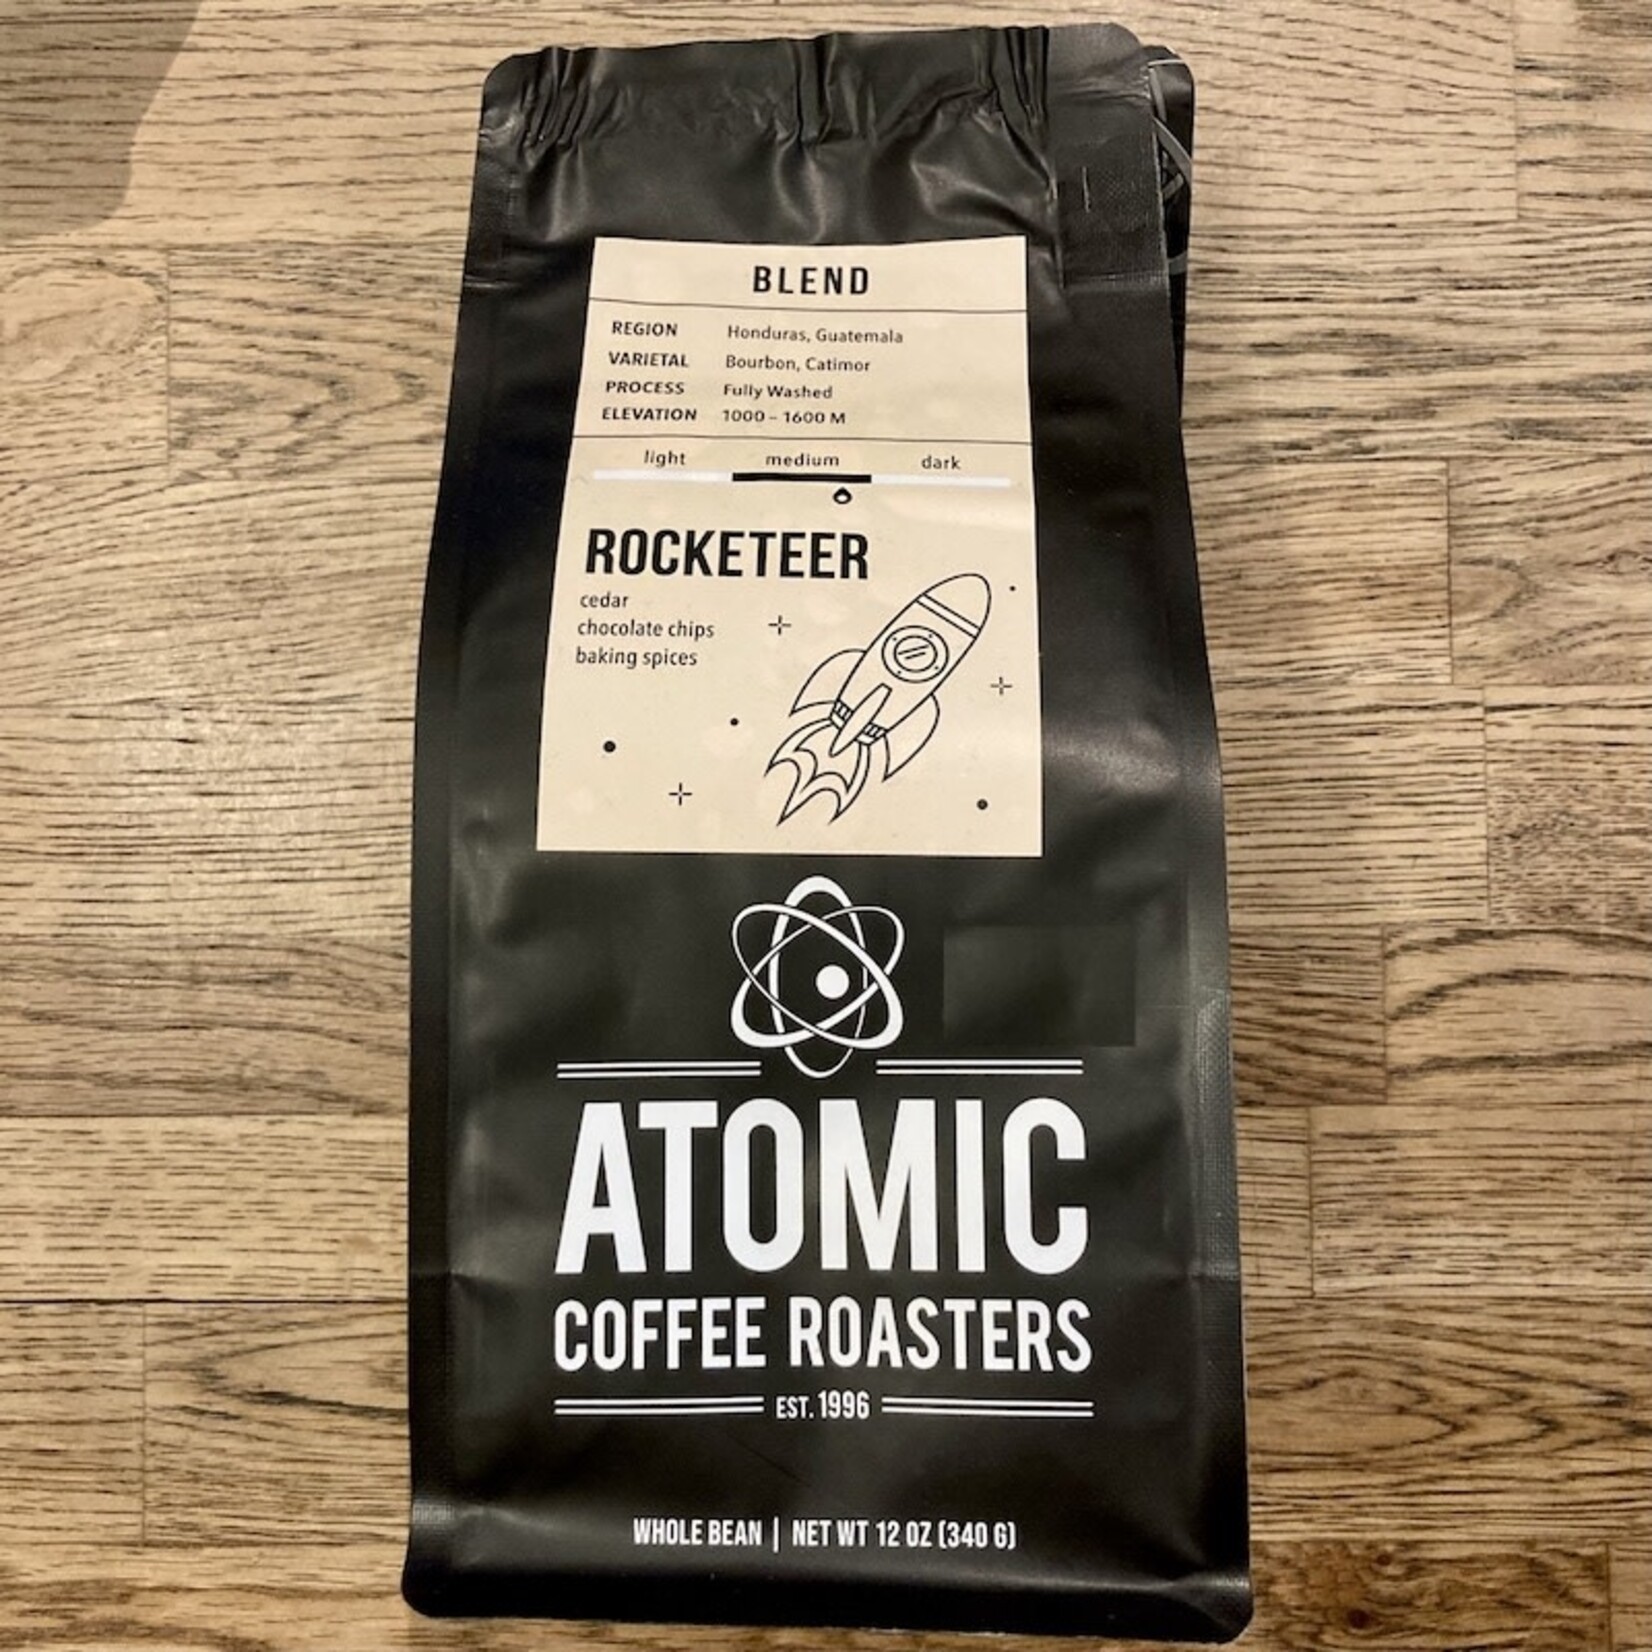 USA Atomic Coffee Roasters "Rocketeer"